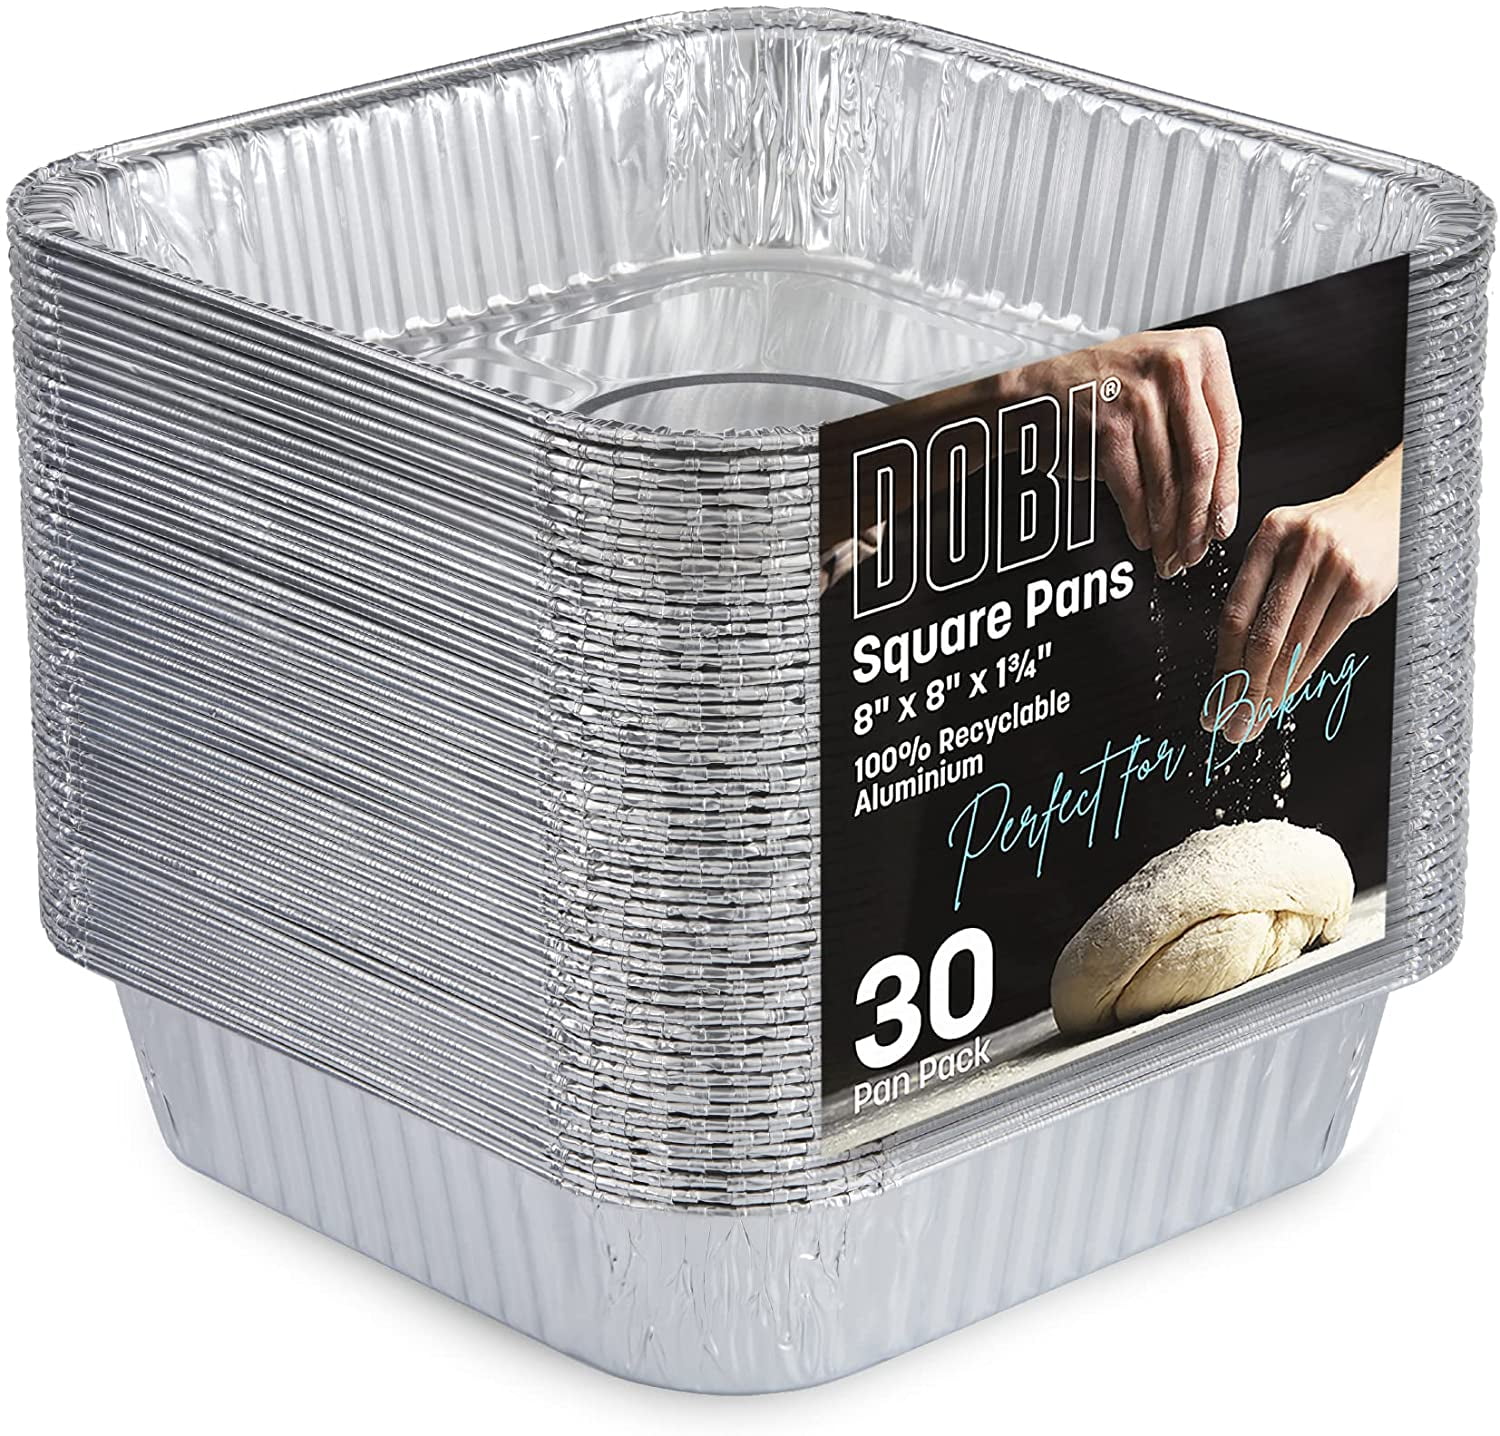 8x8 Foil Pans with Lids (10Count) 8 Inch Square Aluminum Pans with